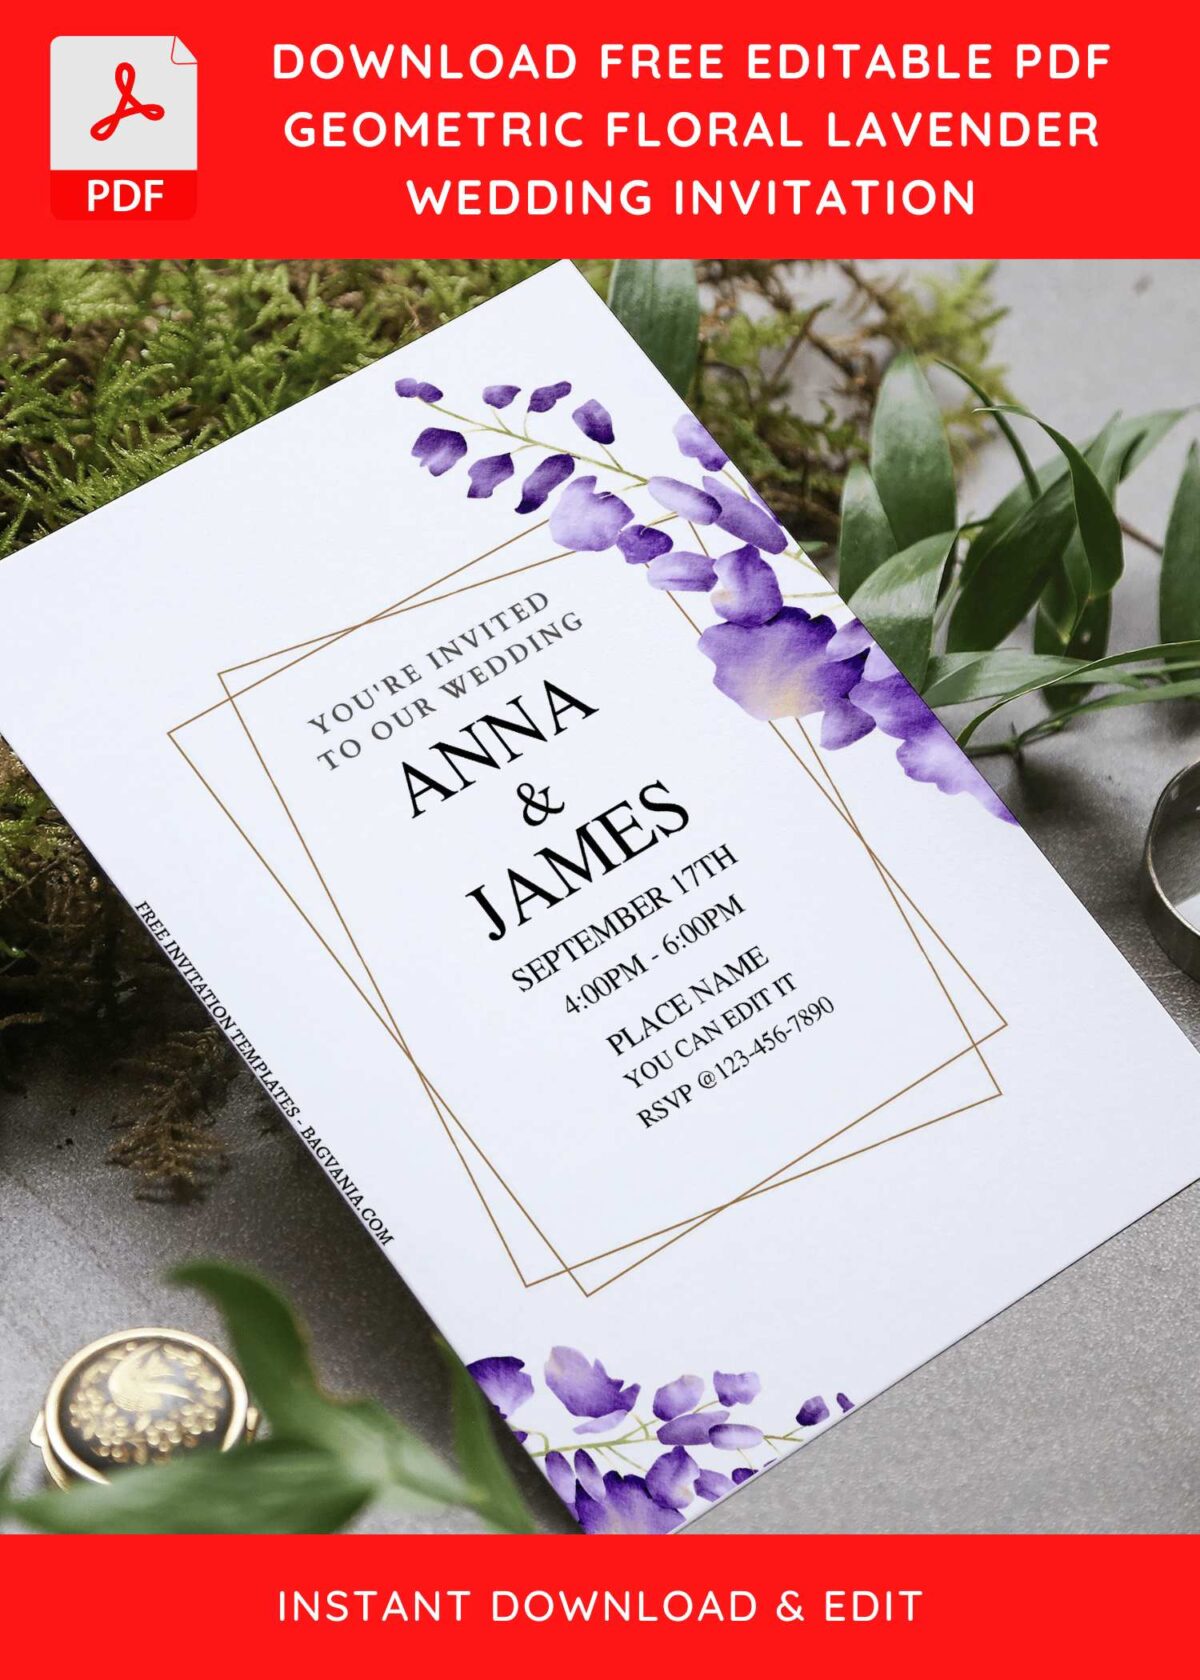 (Free Editable PDF) Classy Geometric Lavender Wedding Invitation Templates F